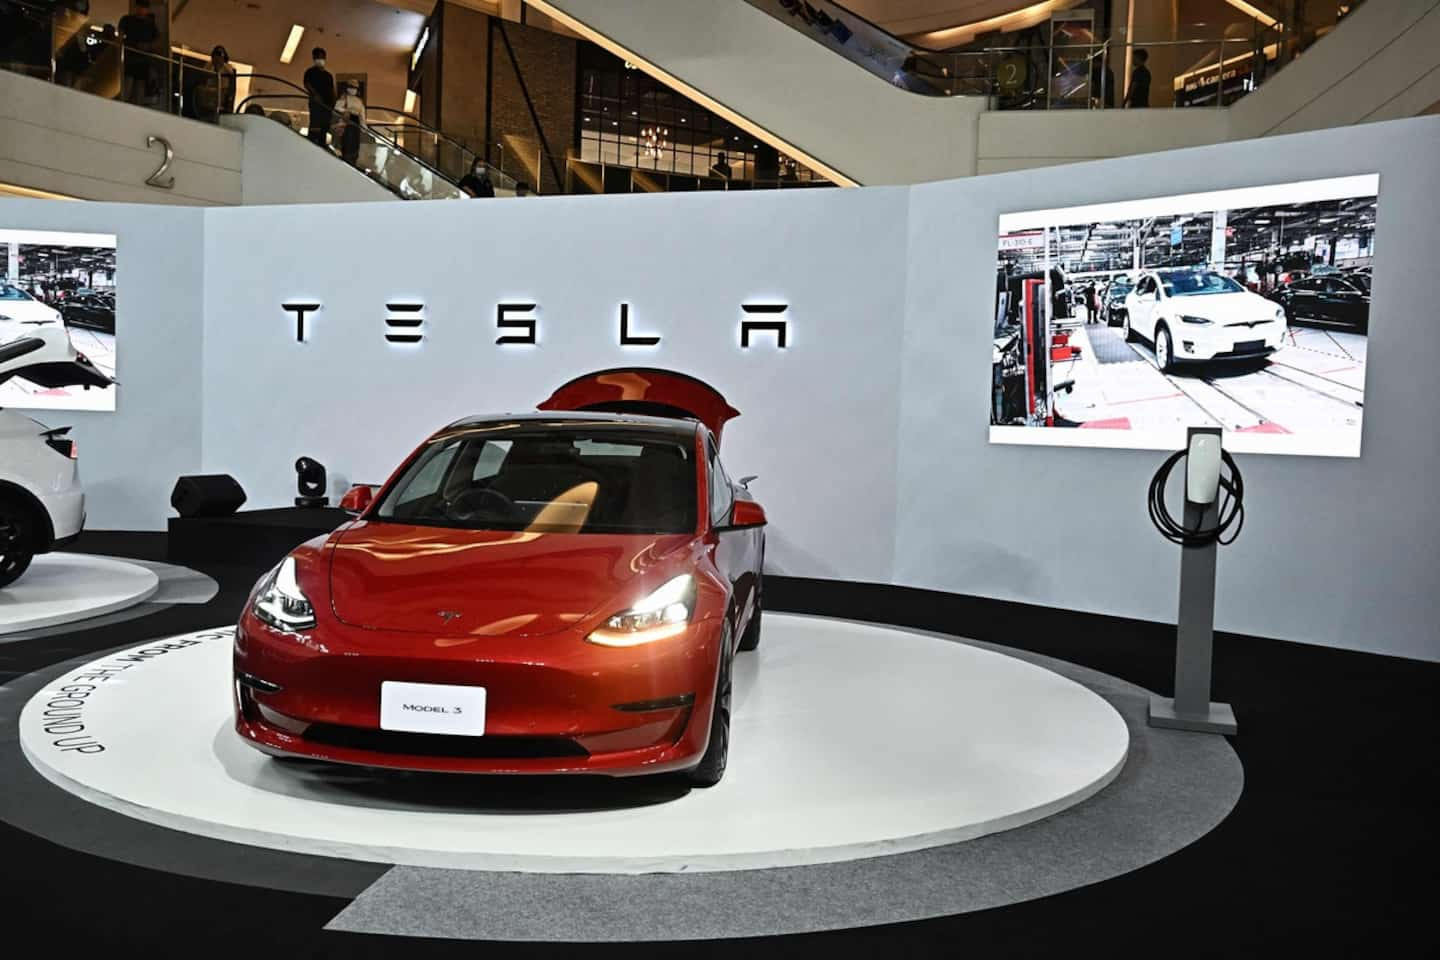 $2.2 million fine for Tesla in South Korea